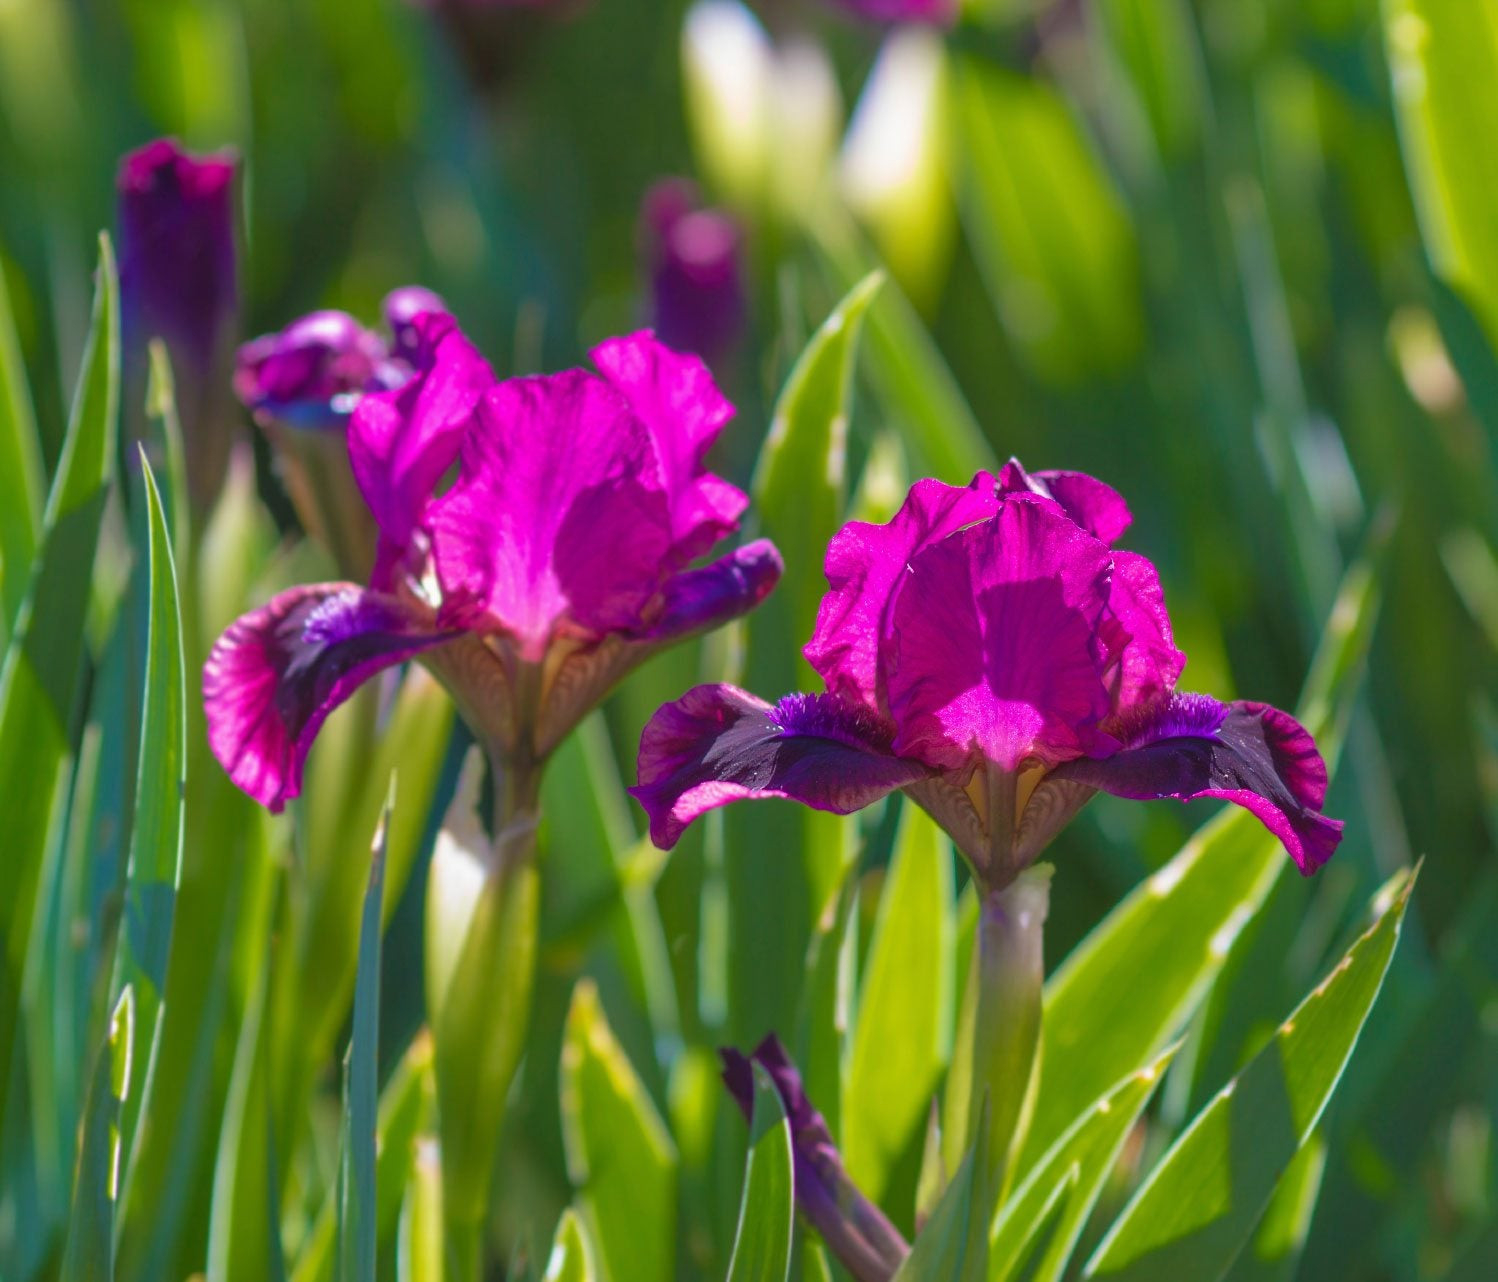 Iris Plants – Tips For Growing Iris